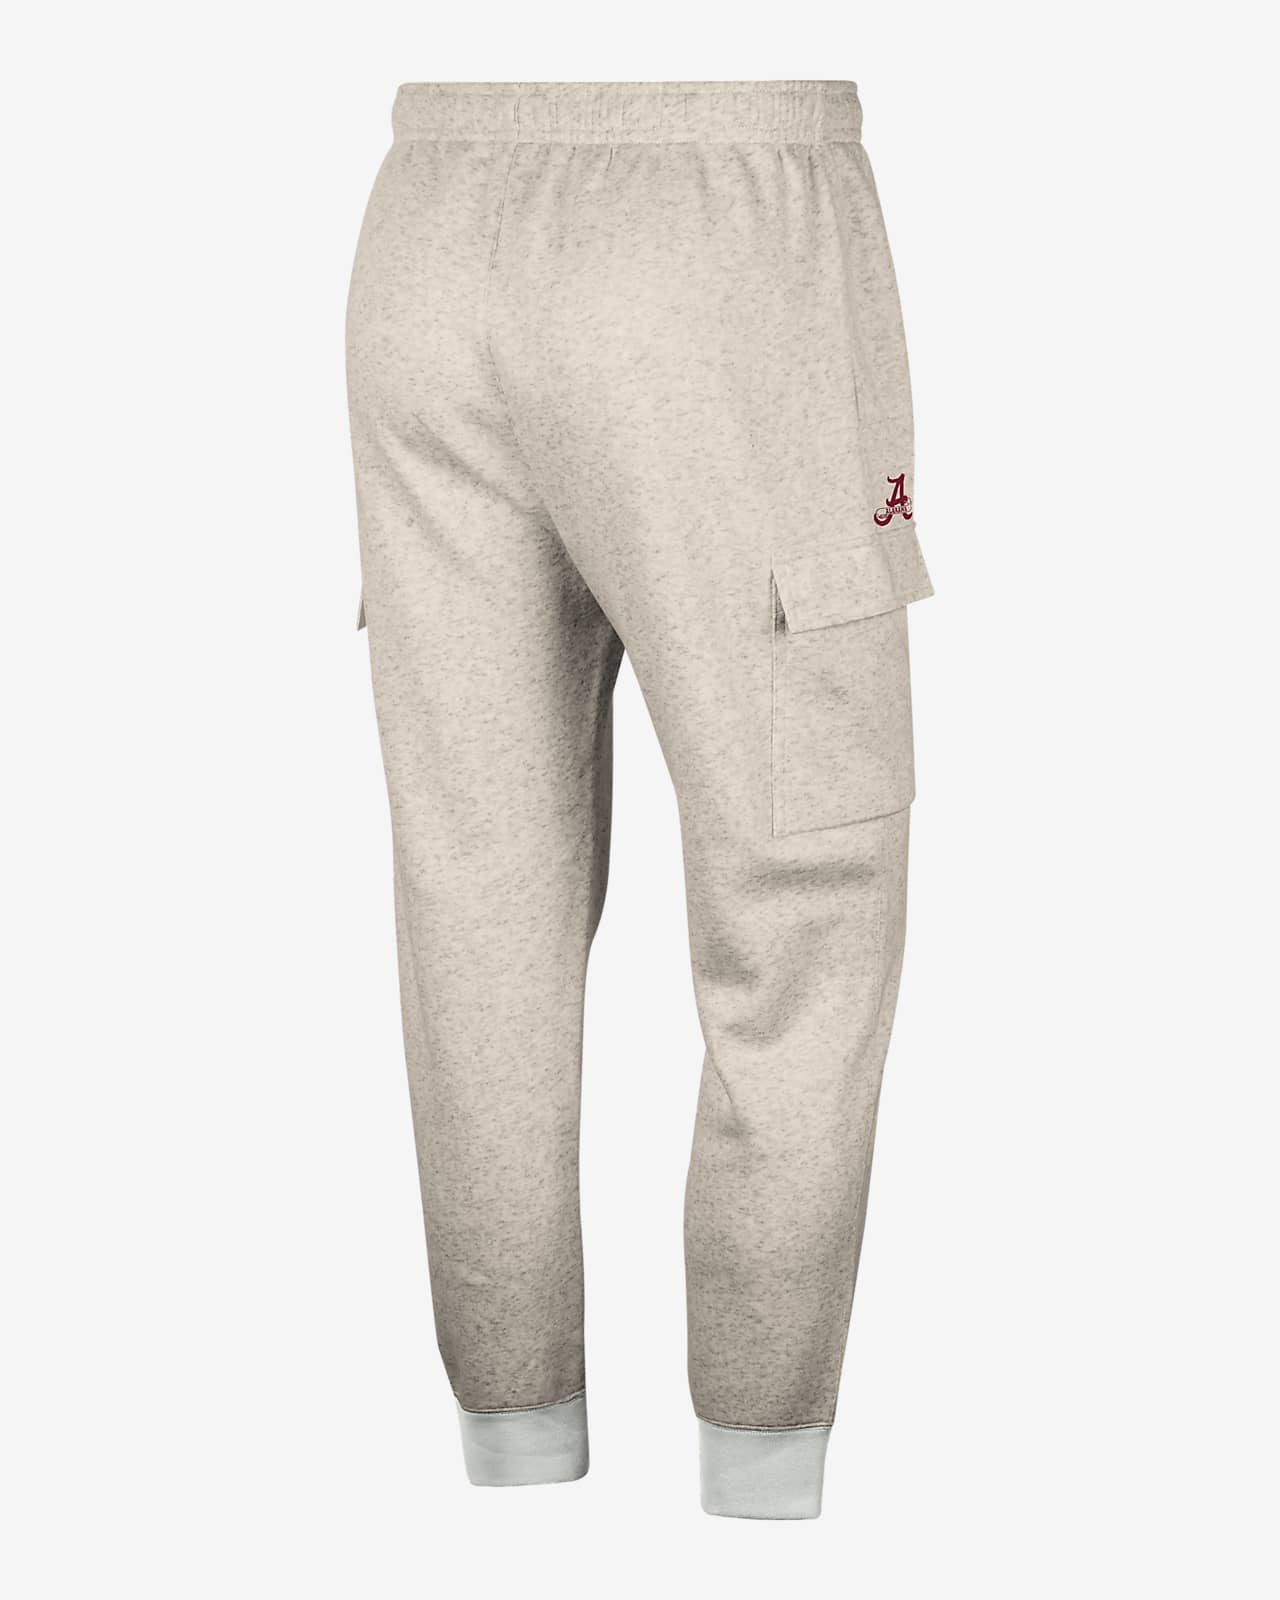 Bama, Alabama Nike Club Fleece Pants